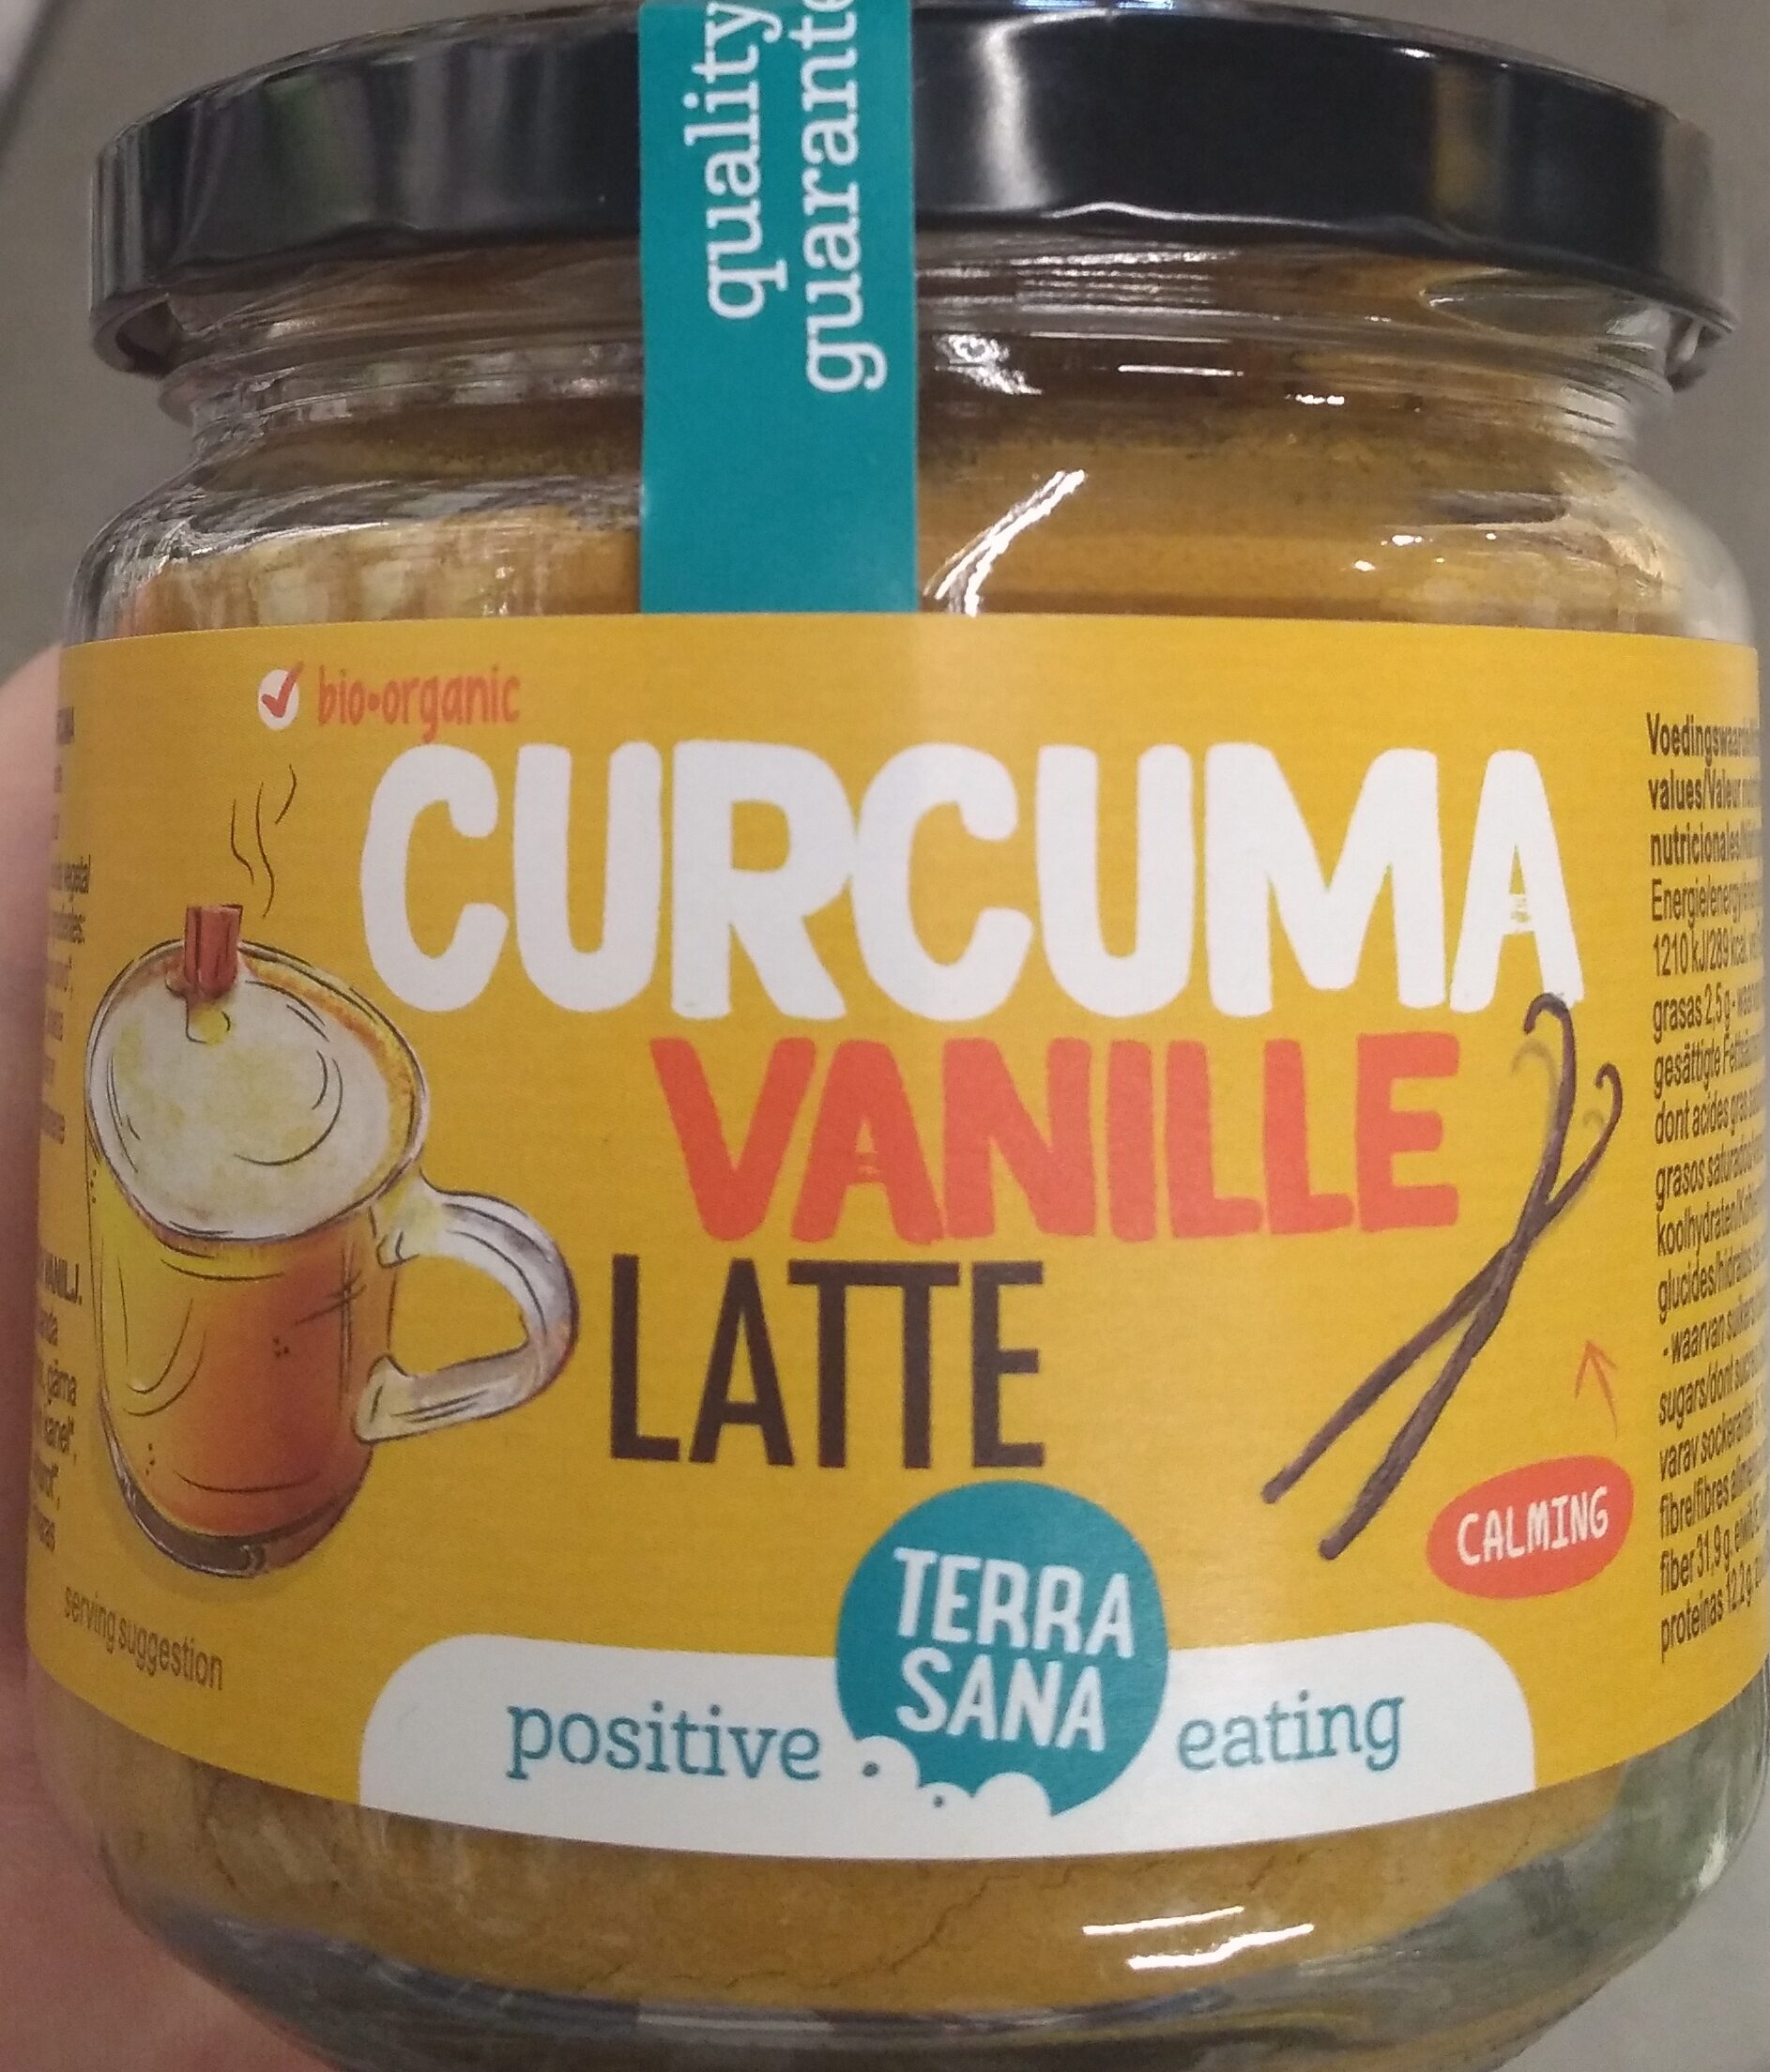 Curcuma vanille latte - Product